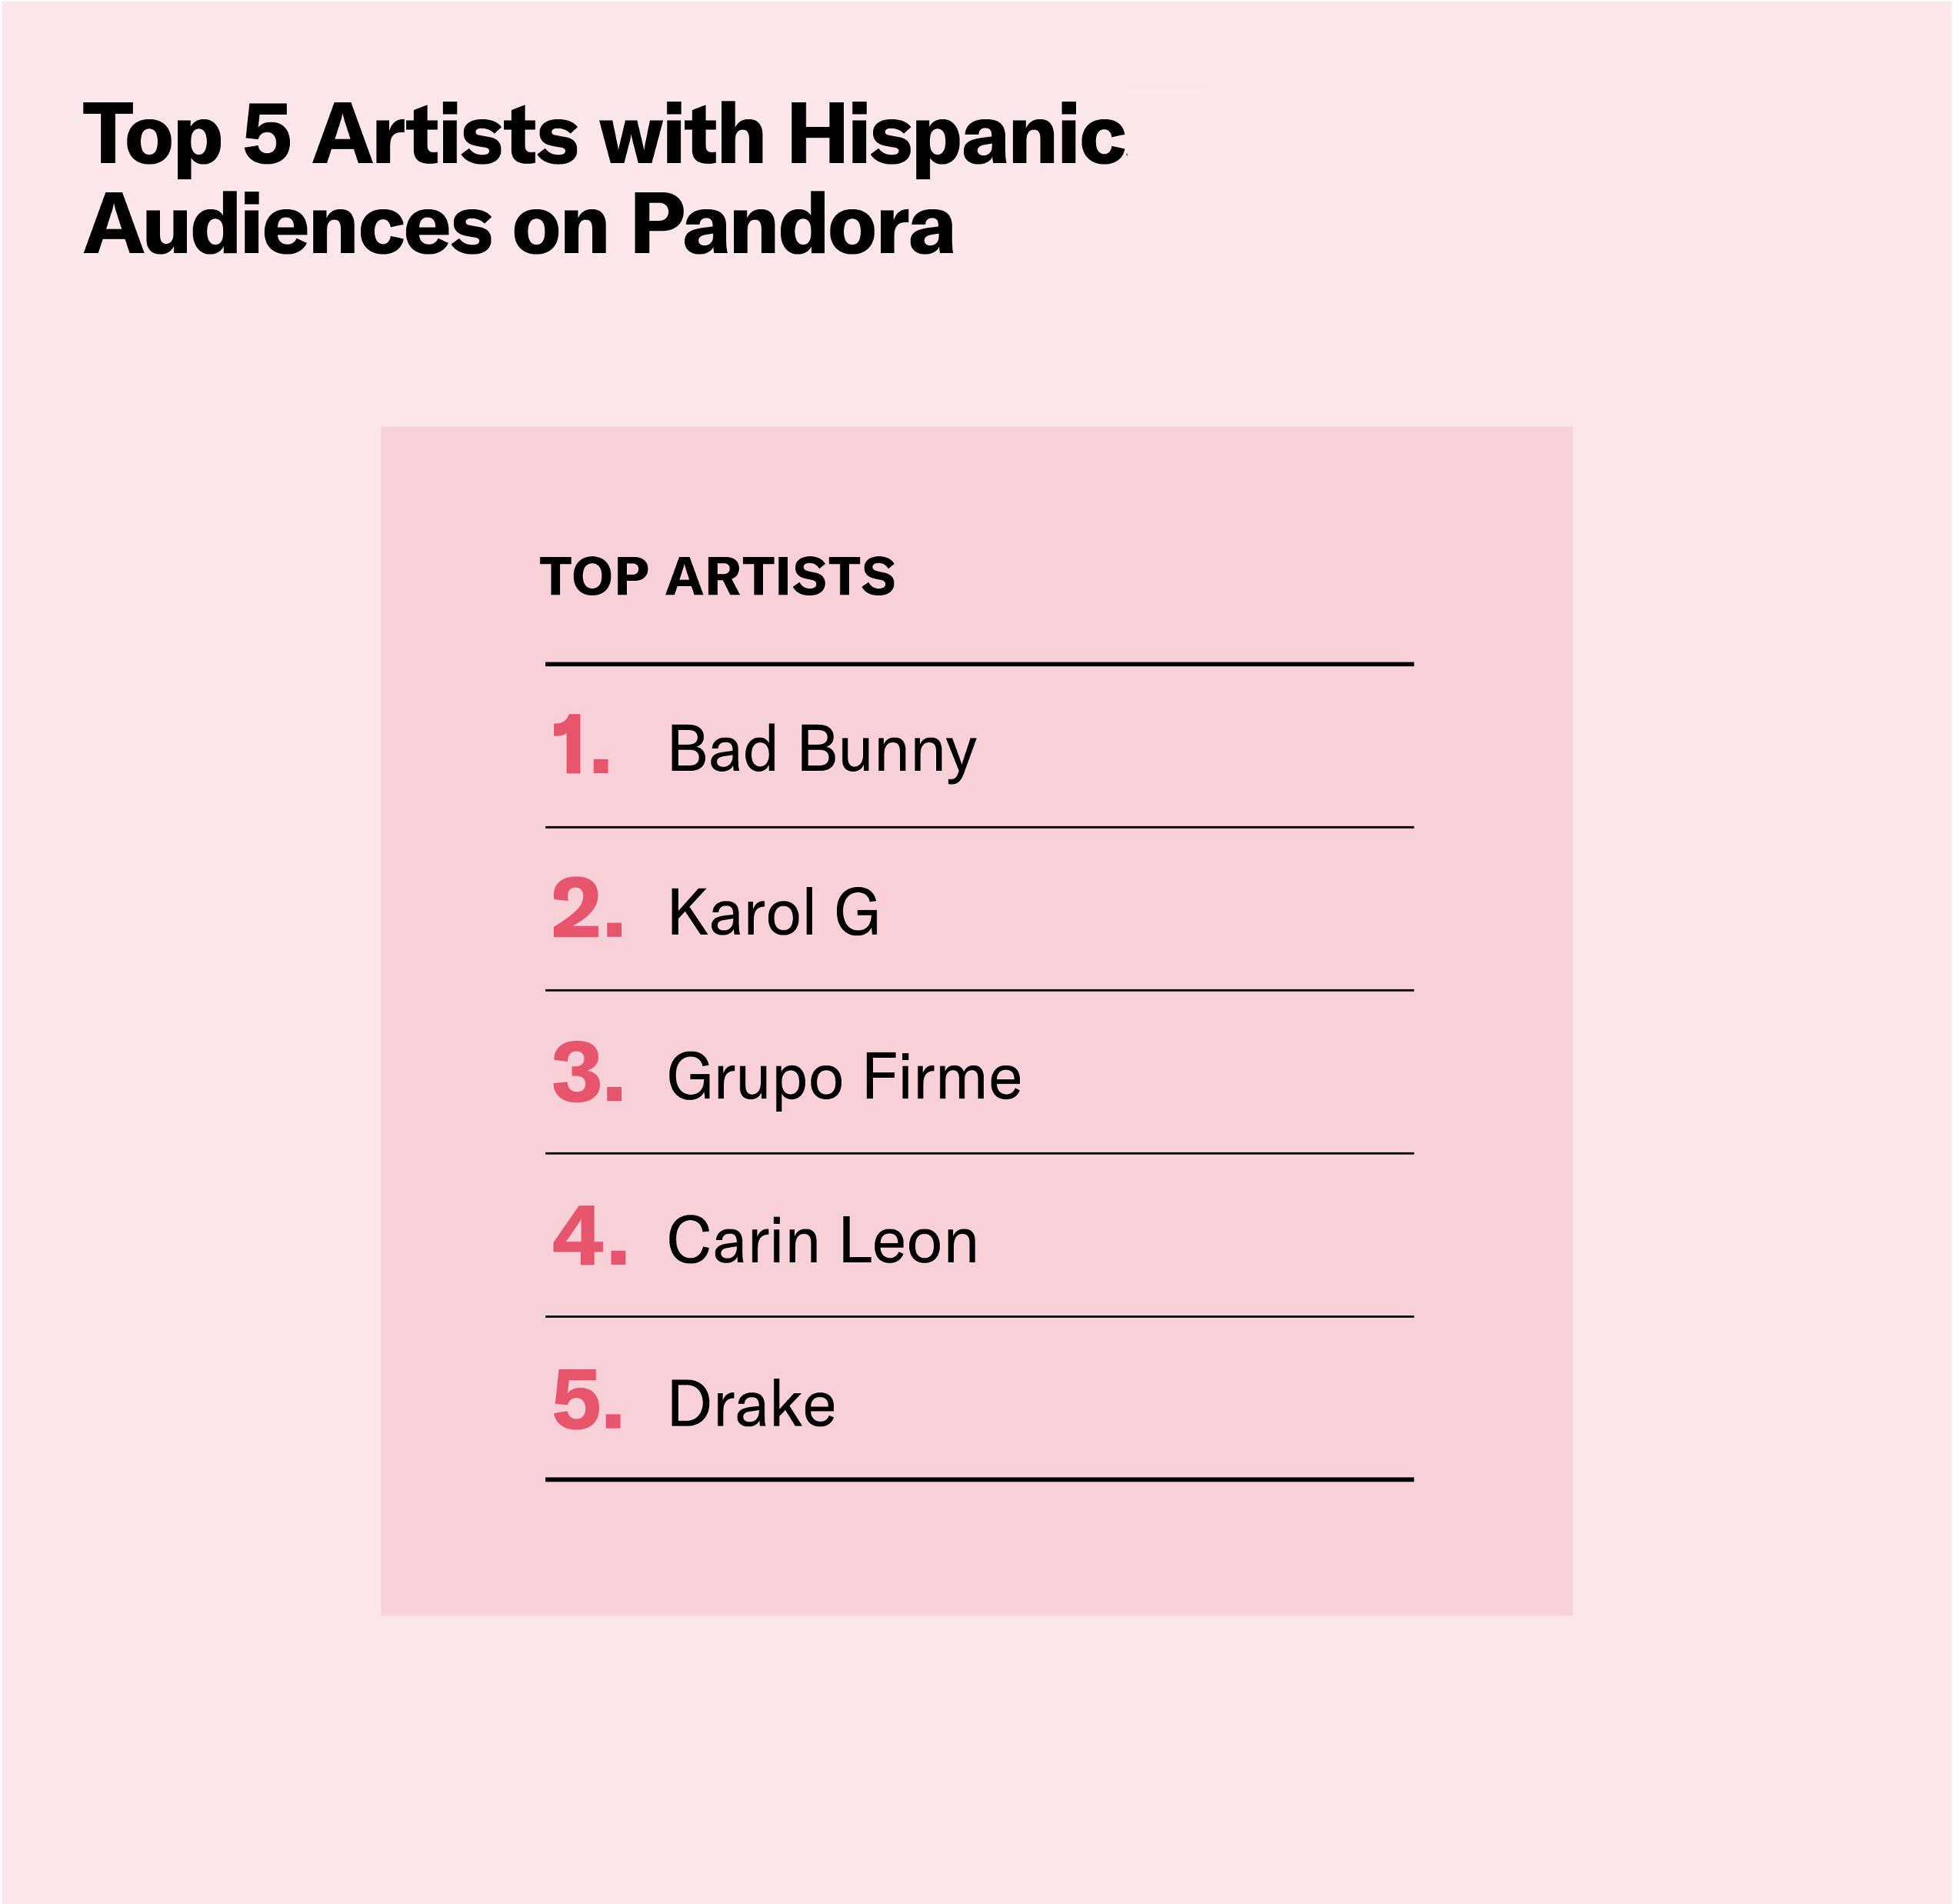 Top 5 Artists with Hispanic Audiences on Pandora